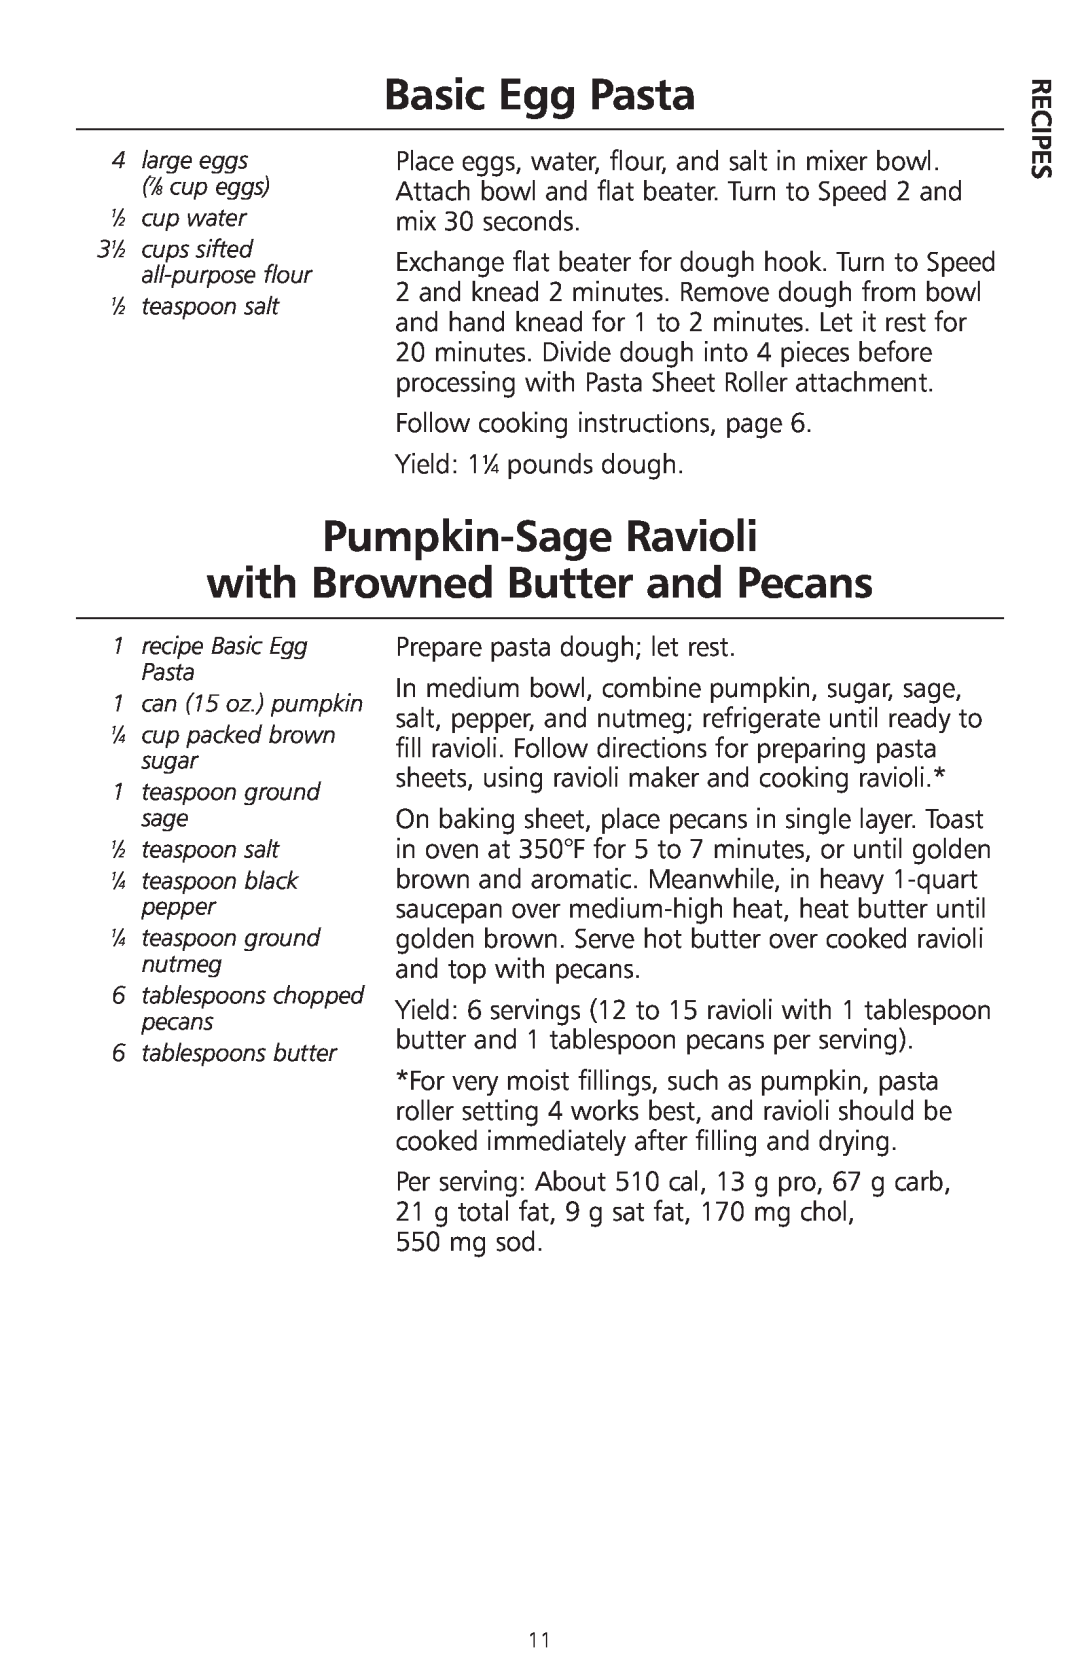 KitchenAid Model KRAV manual Basic Egg Pasta, Pumpkin-SageRavioli, with Browned Butter and Pecans 